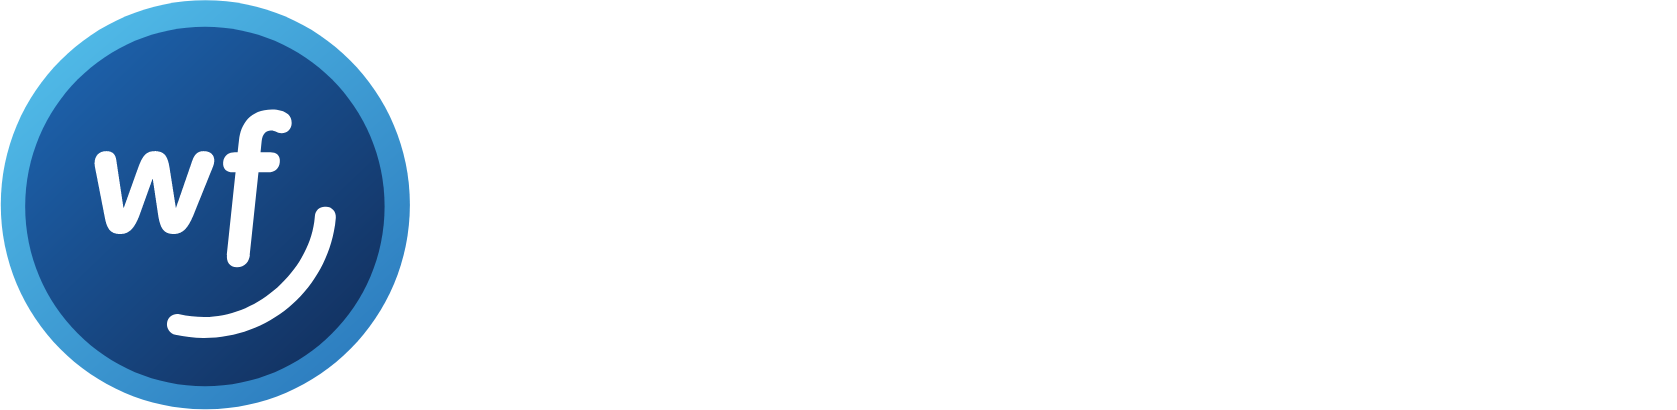 World Acceptance Corporation Logo groß für dunkle Hintergründe (transparentes PNG)